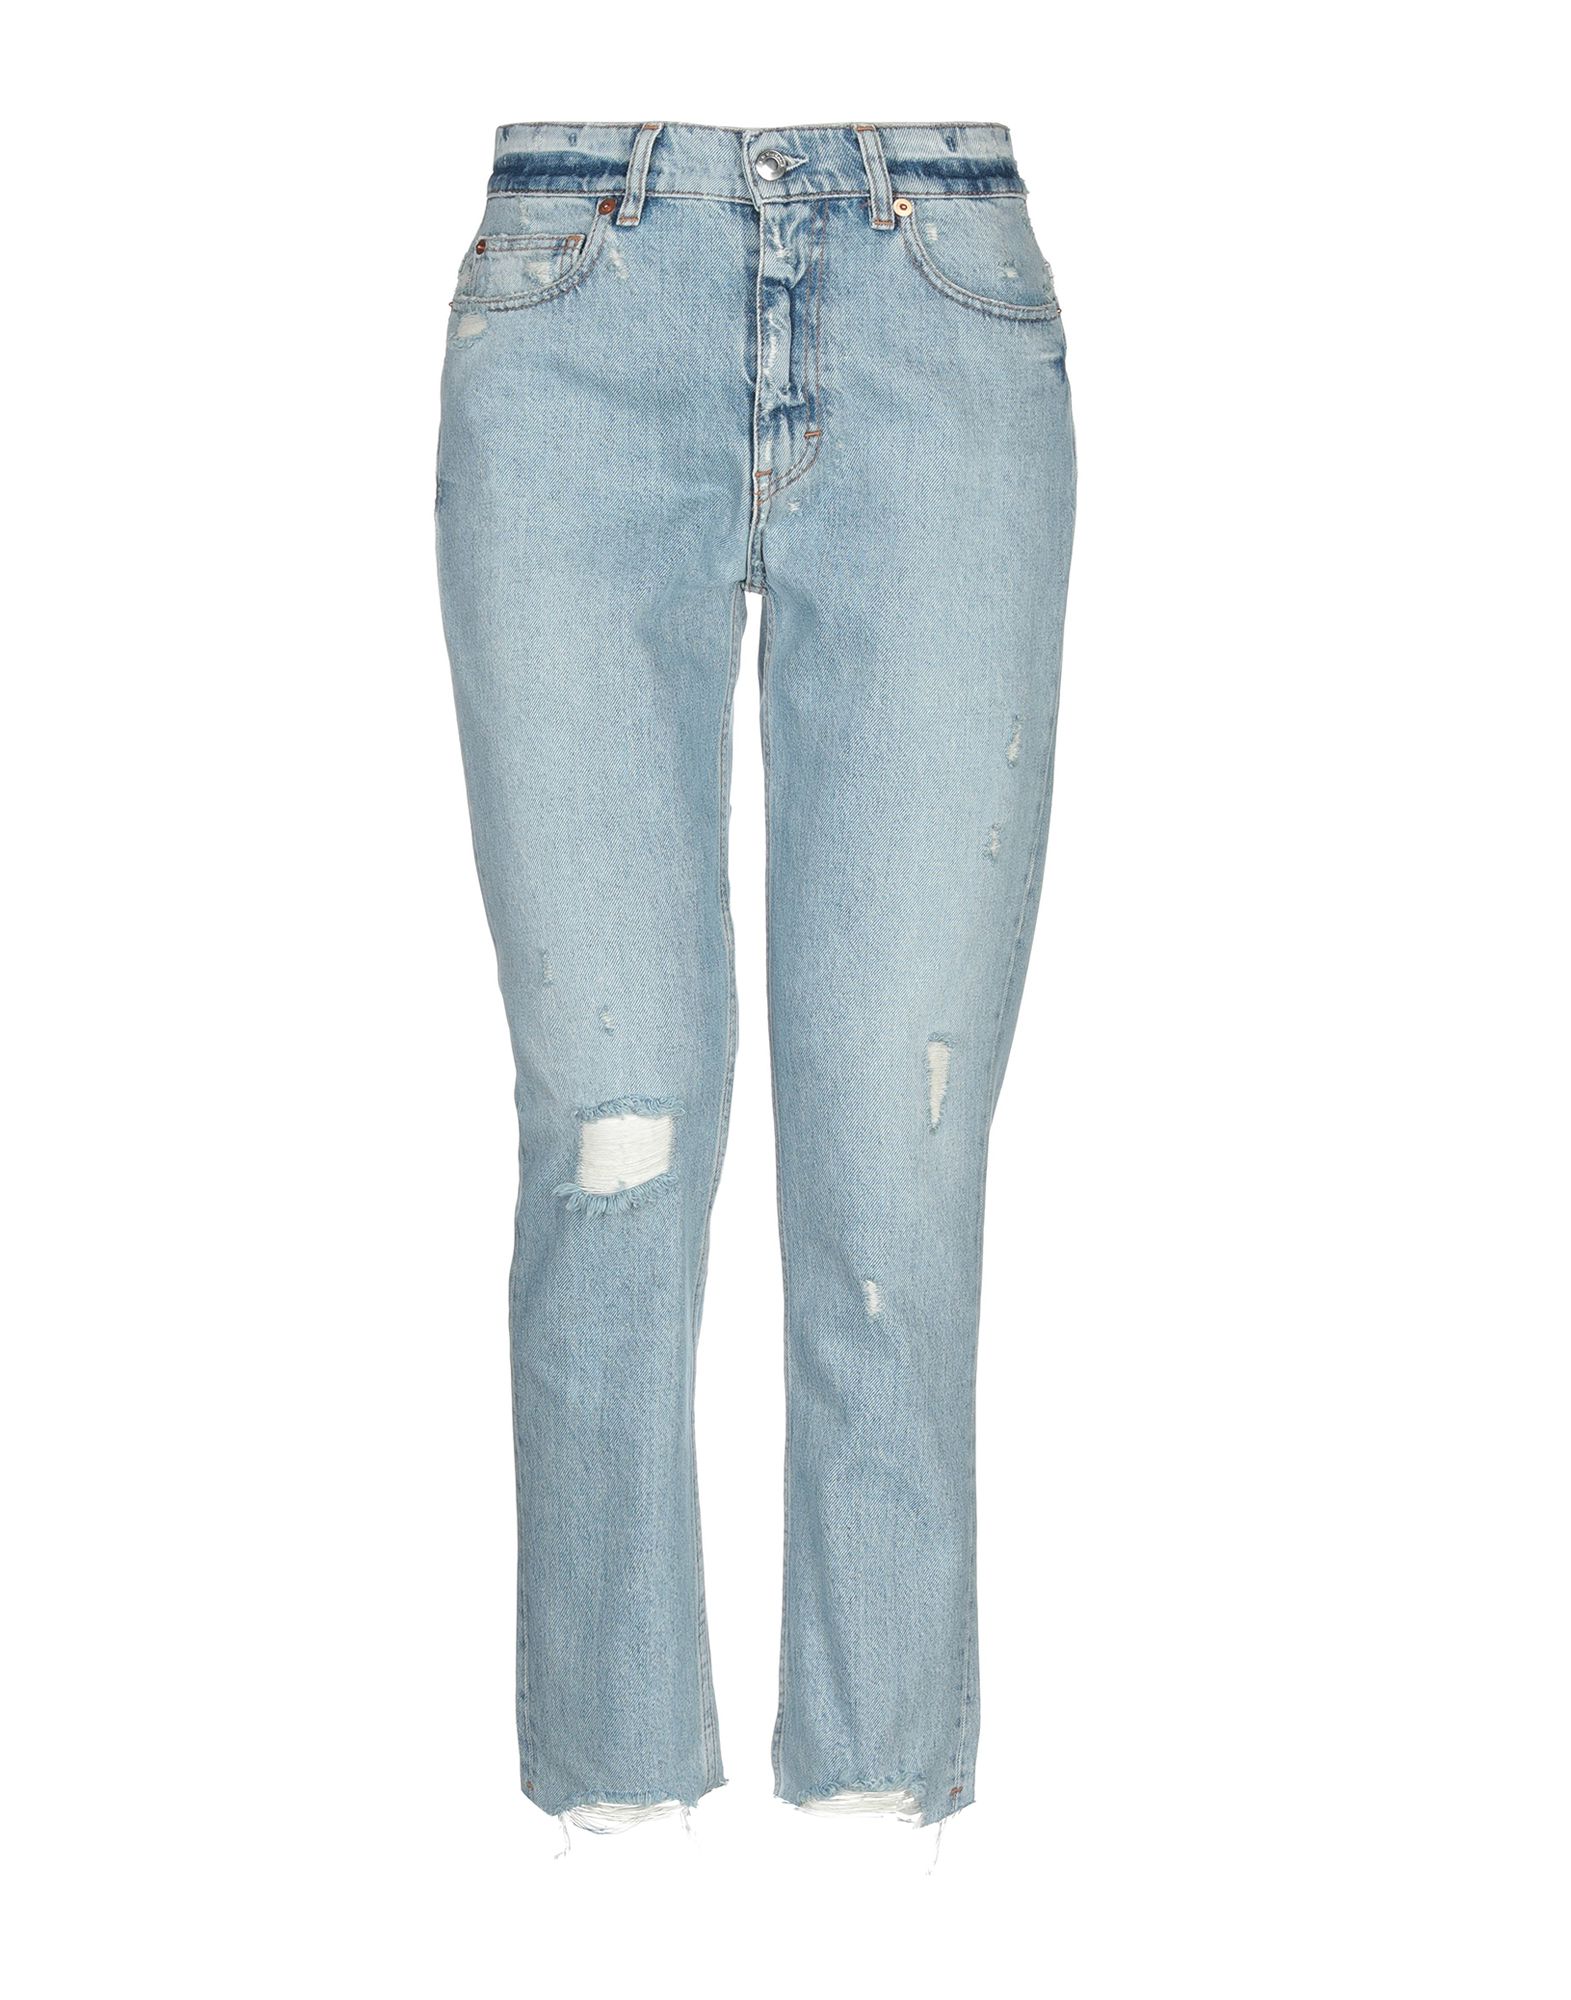 IRO.JEANSIRO. JEANS Jeans | DailyMail